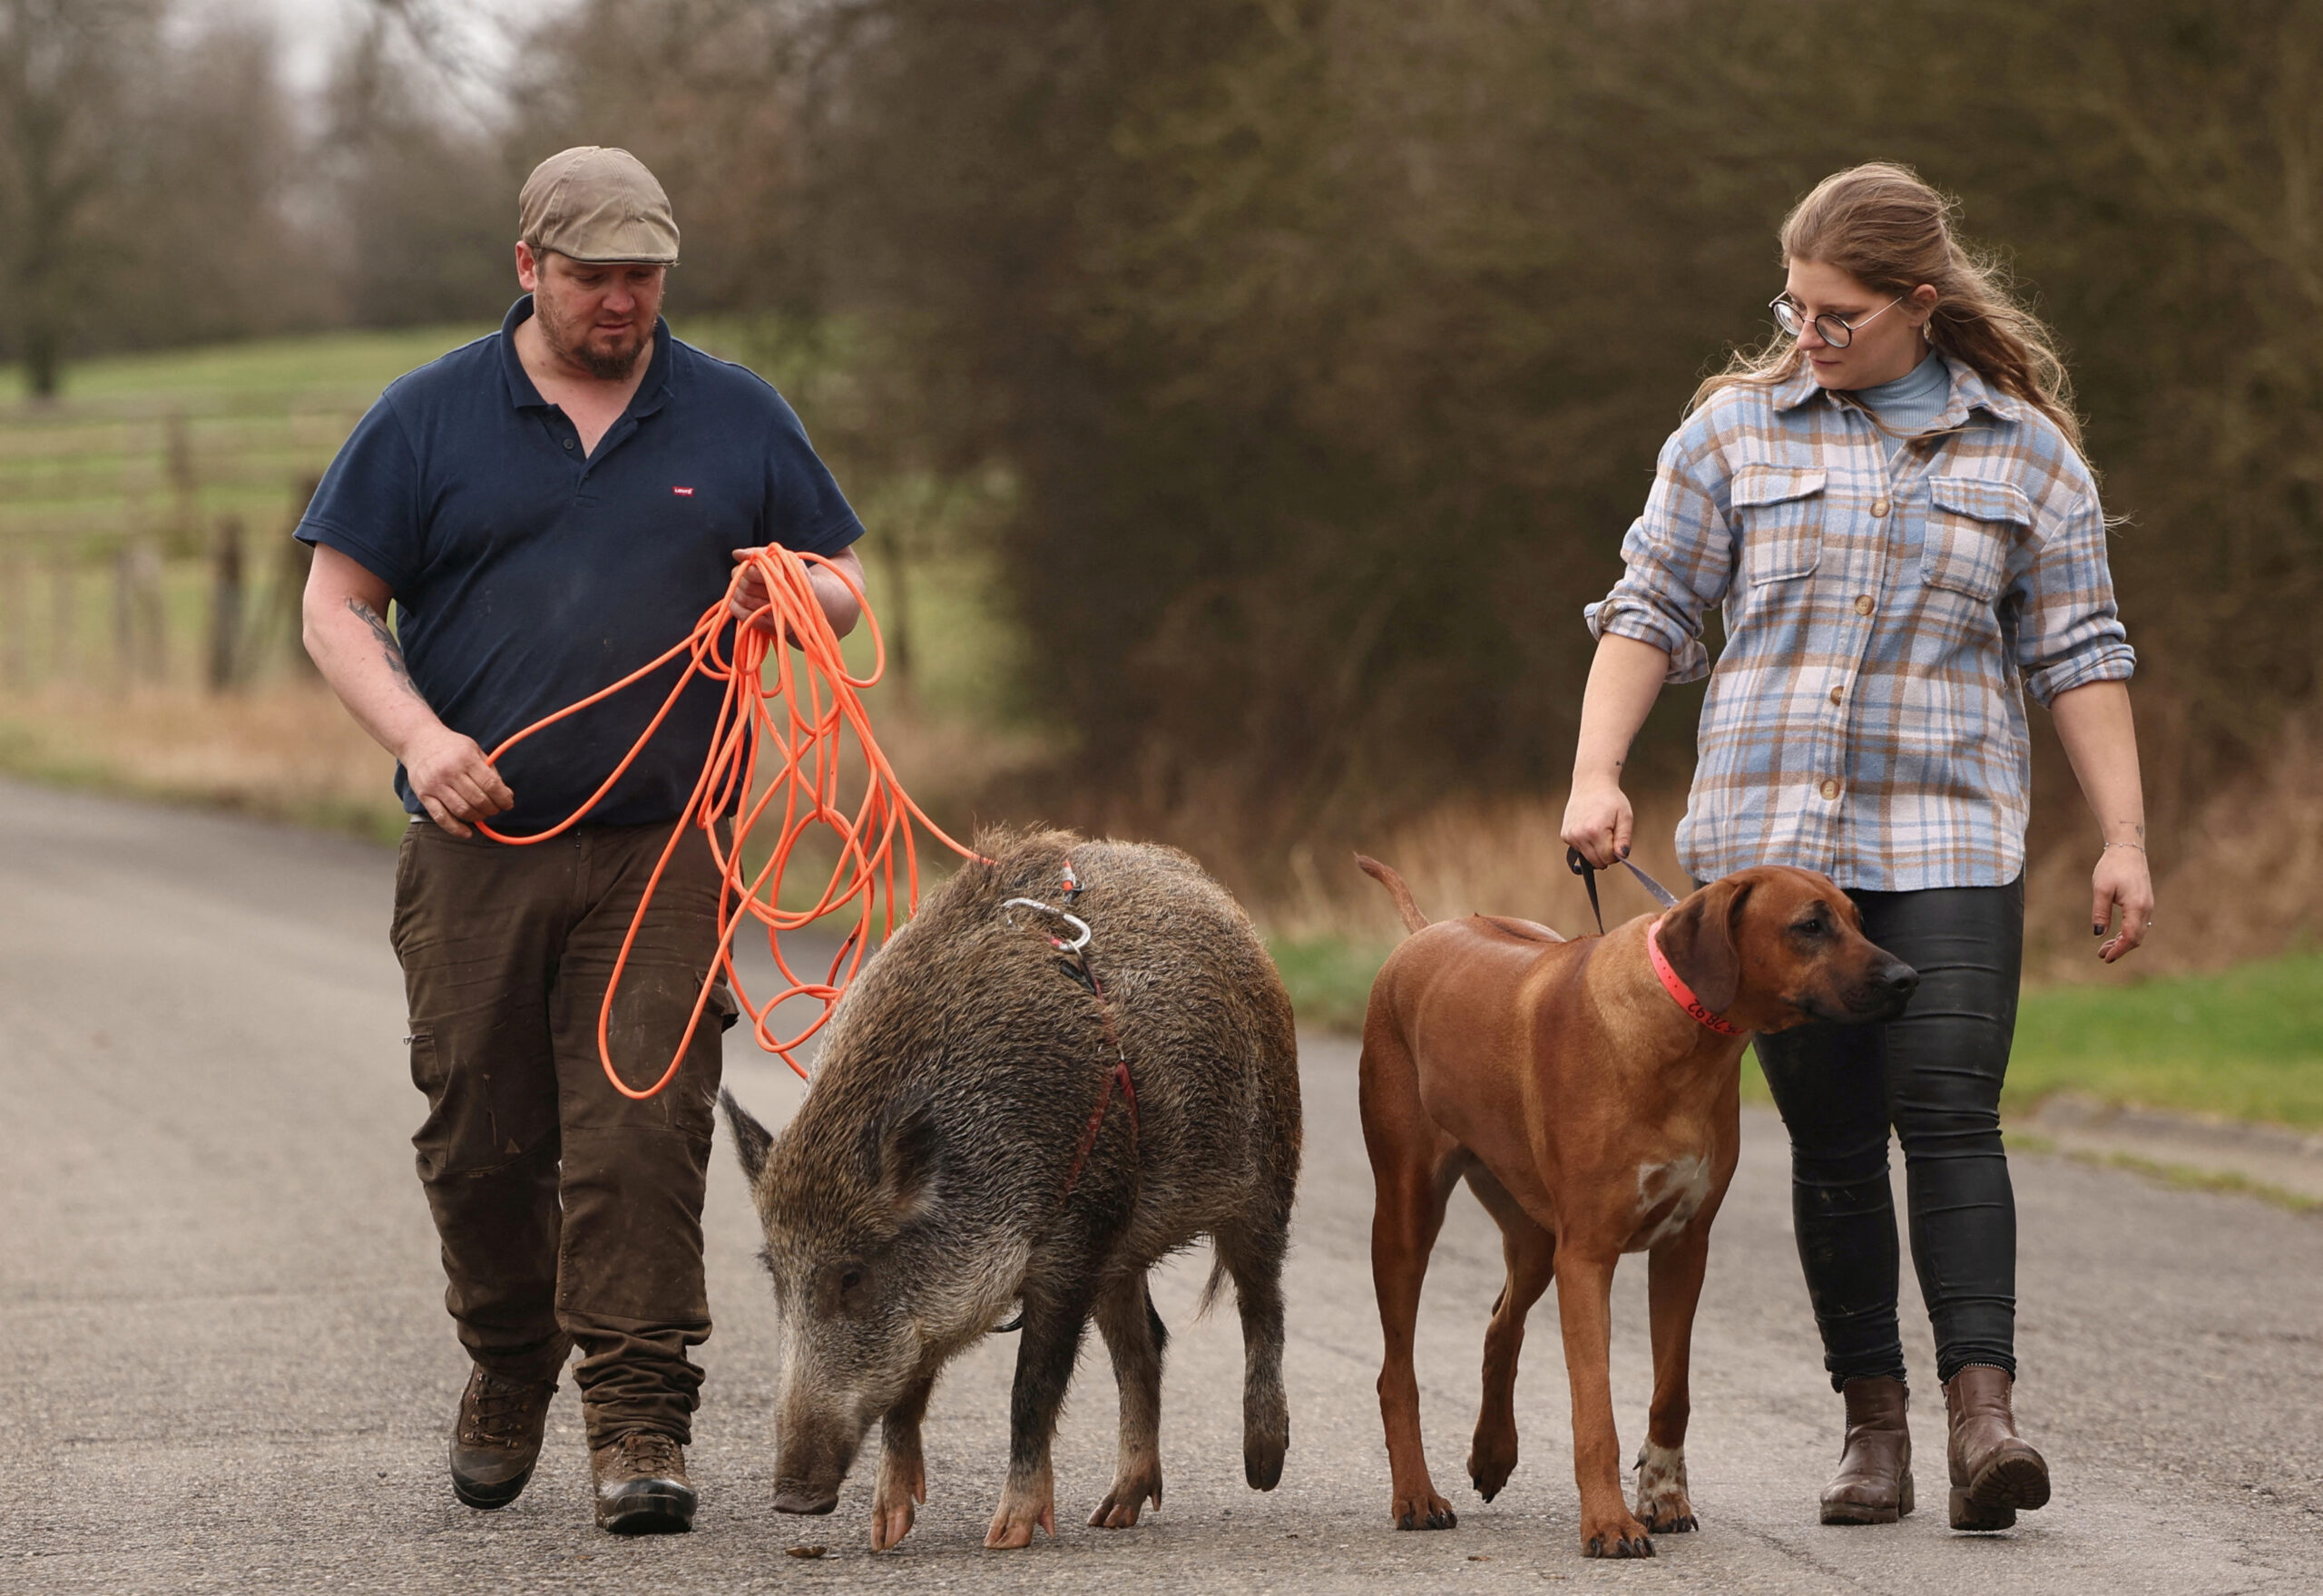 Belgian couple makes indoor pet of rescued wild boar | Image Credit: reuters.com